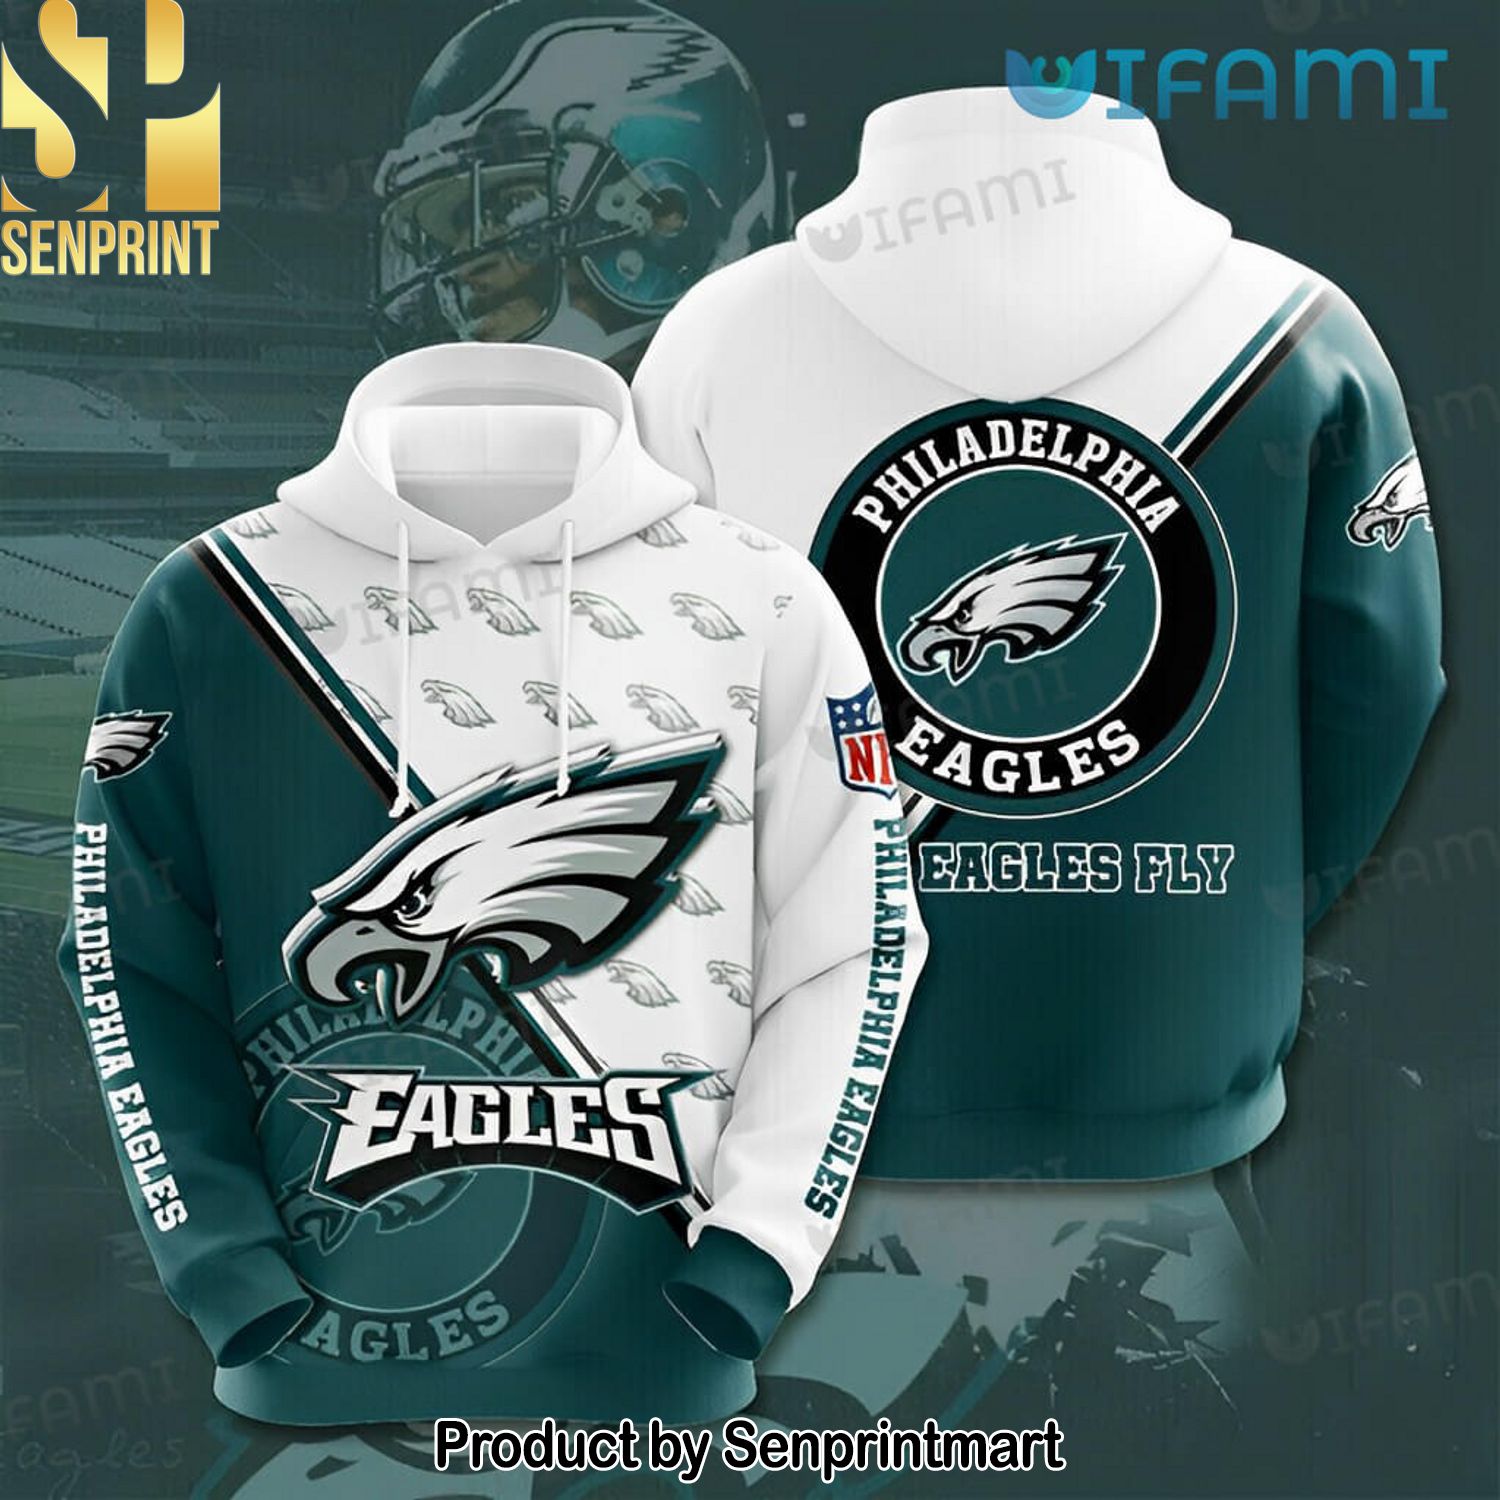 Philadelphia Eagles Football team Awesome Outfit Shirt